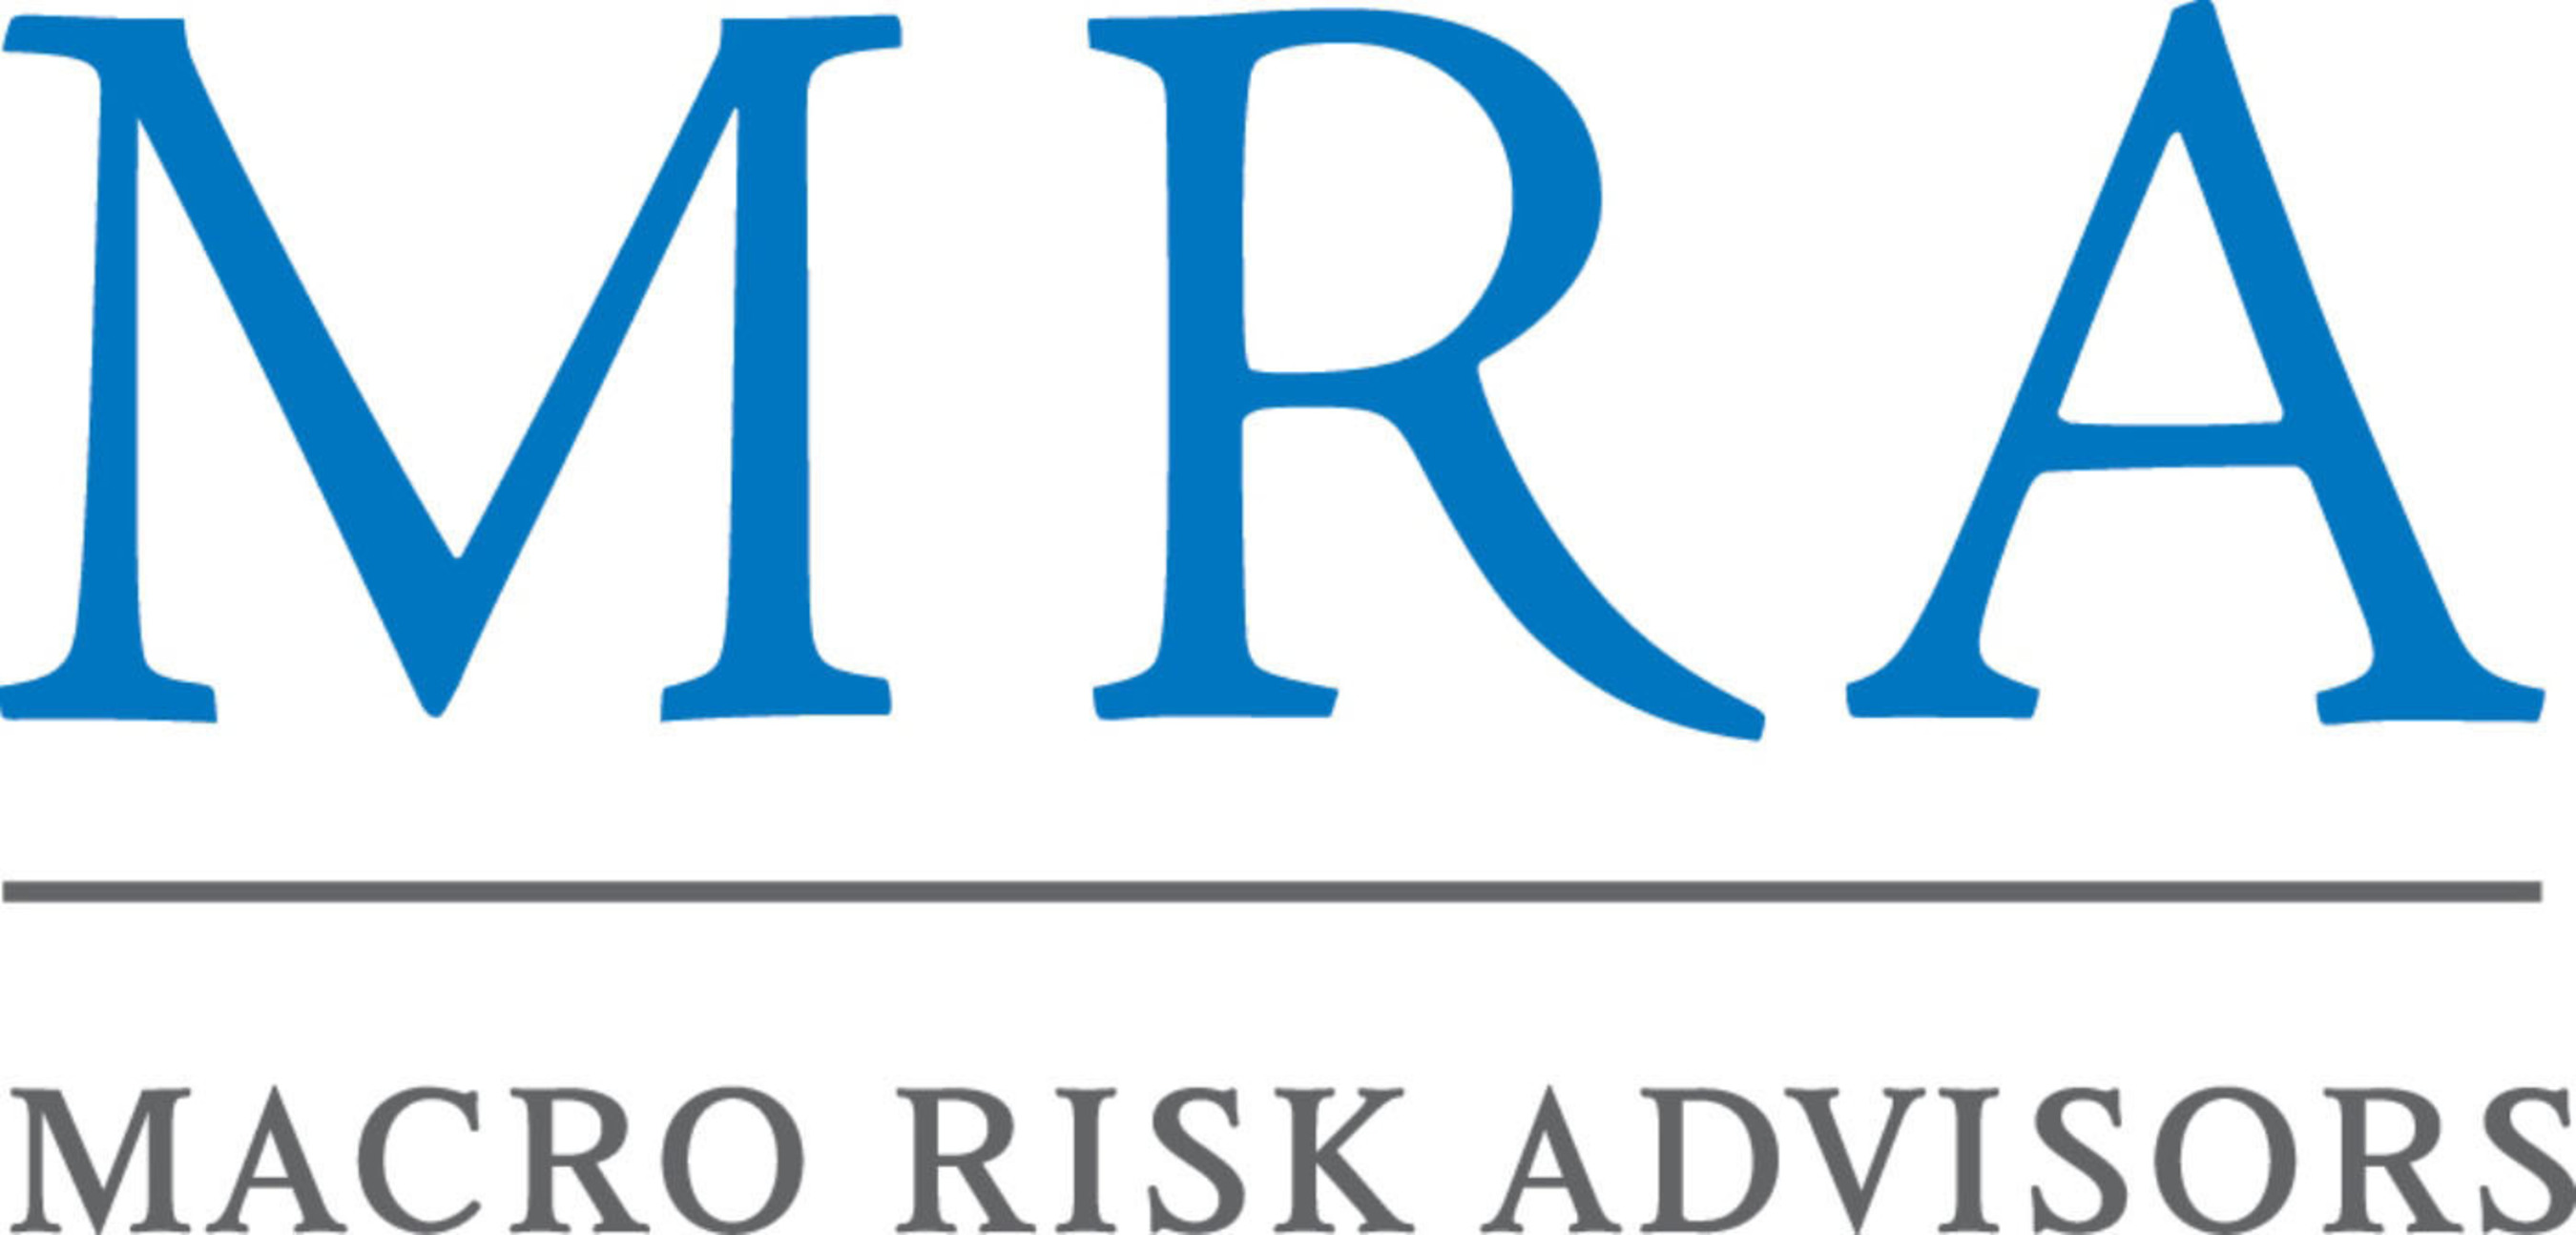 Macro Risk Advisors logo. (PRNewsFoto/Macro Risk Advisors) (PRNewsFoto/MACRO RISK ADVISORS)